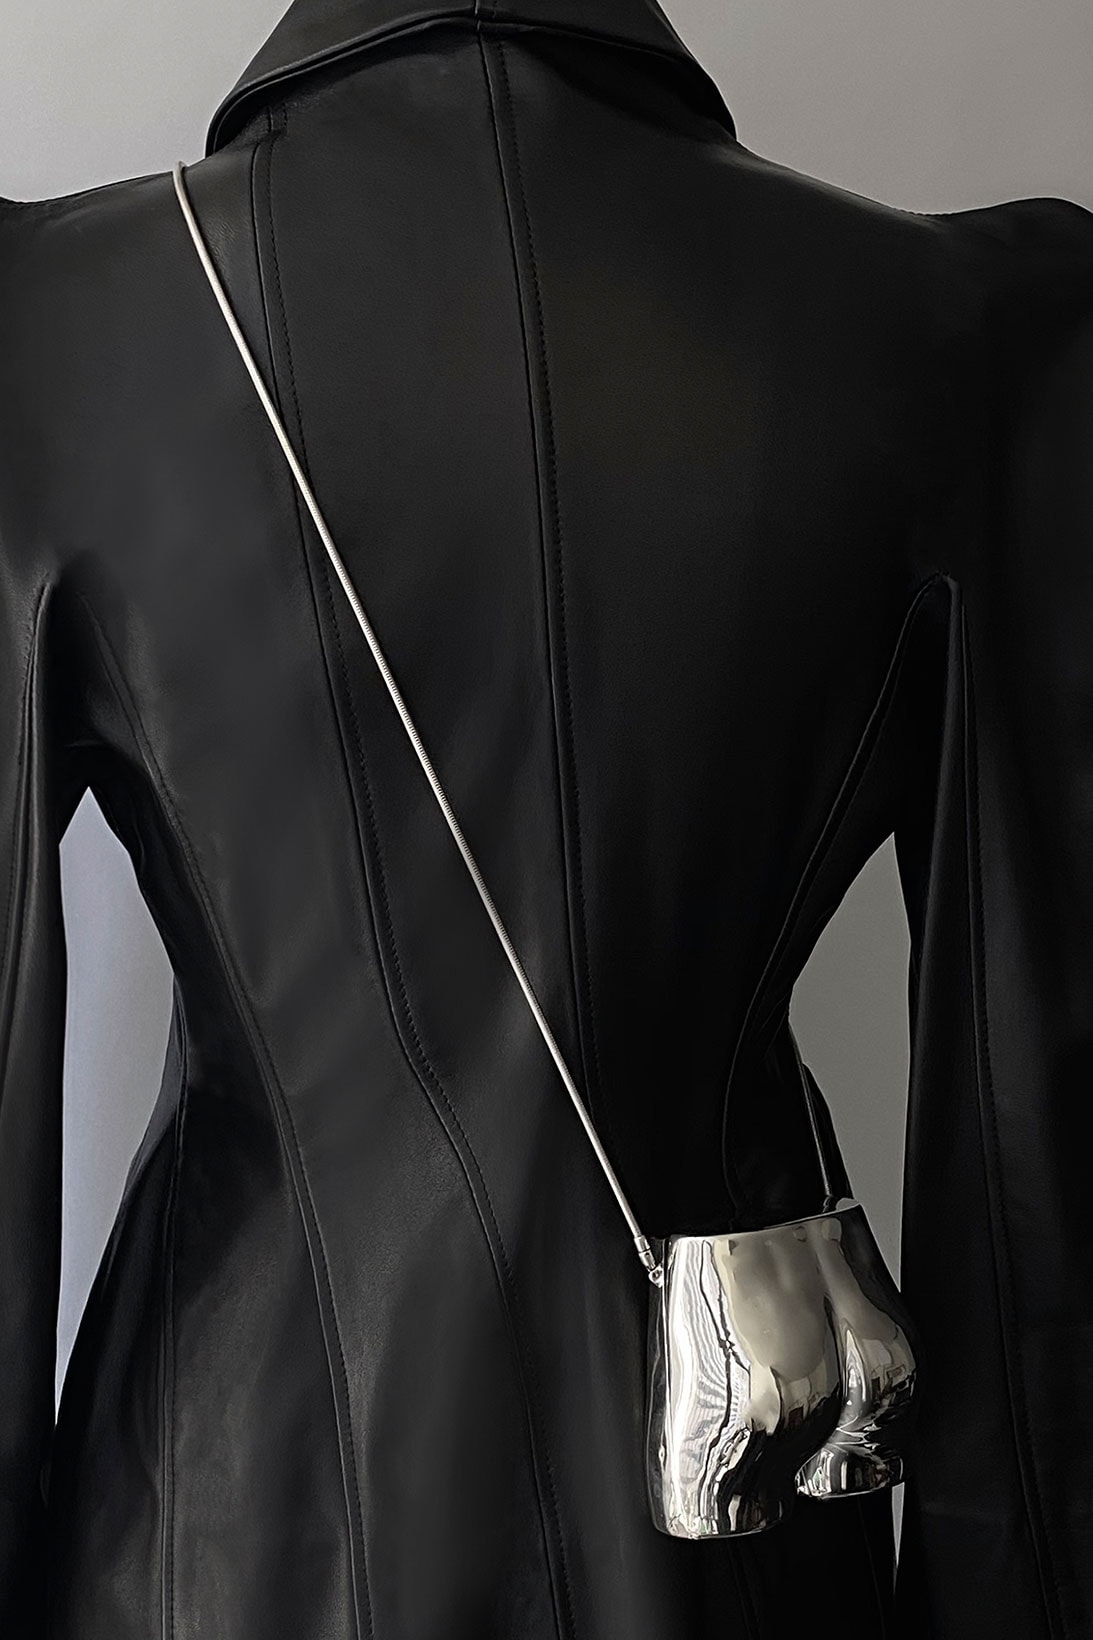 grace ling singapore nyc fashion designer jacket blazer butt bag